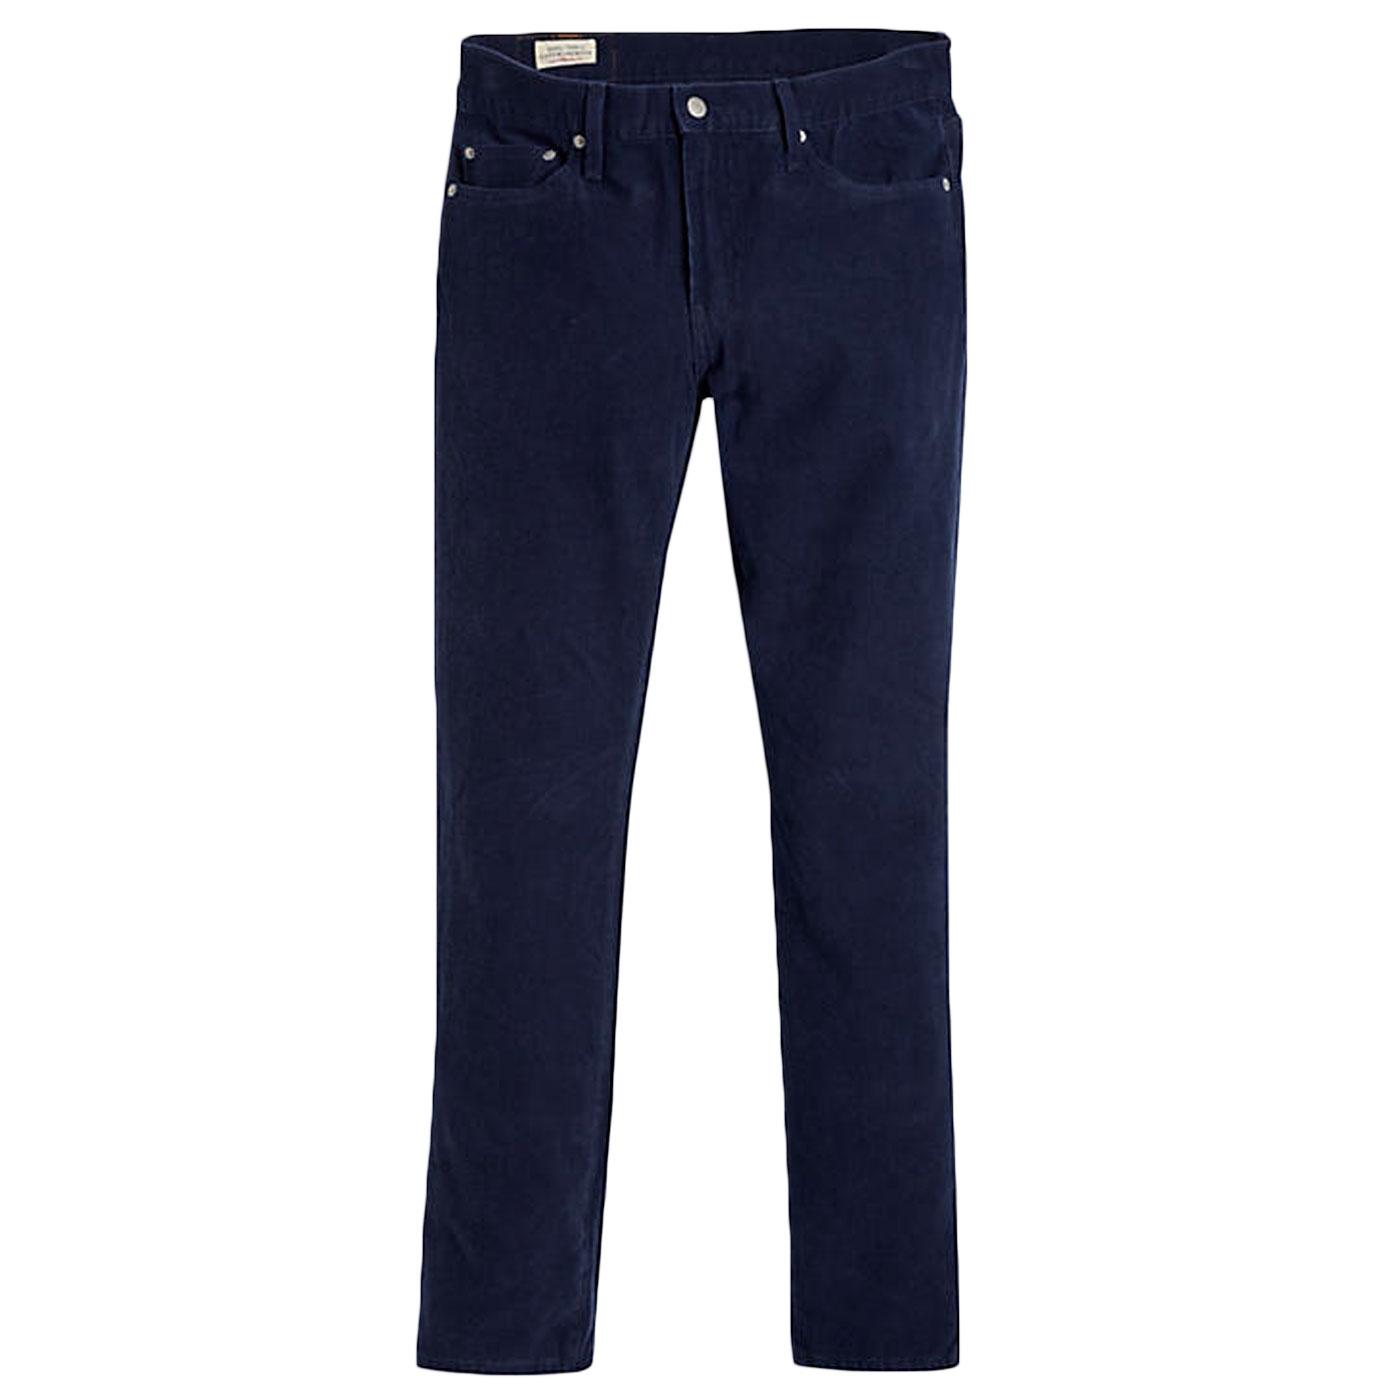 LEVI'S 511 Retro Men's Mod Slim Cord Jeans Nightwatch Blue